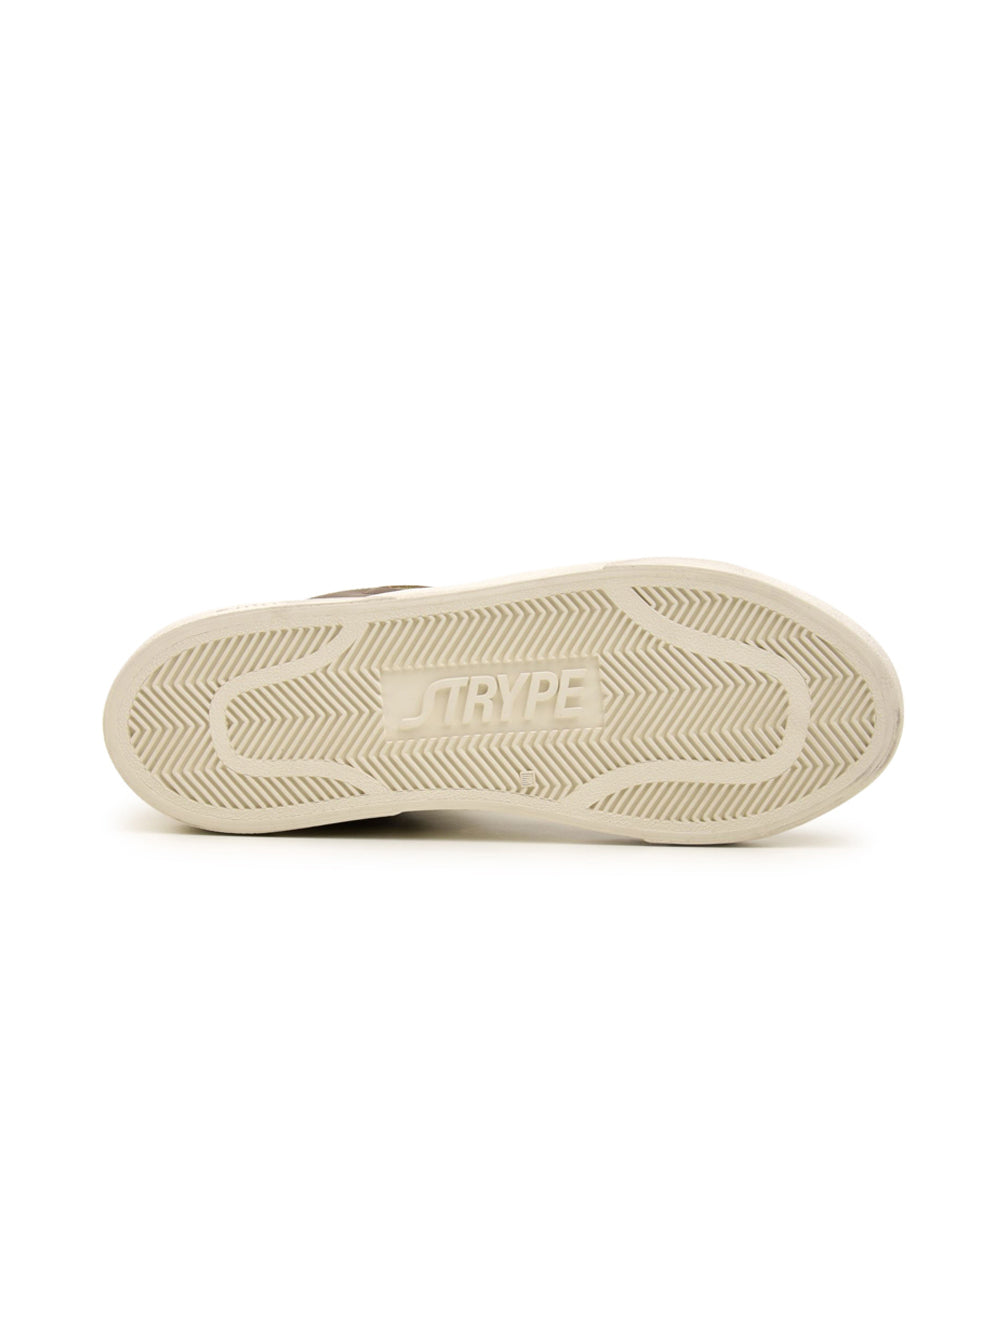 Sneakers Basse STRYPE Uomo ST3002 Grigio